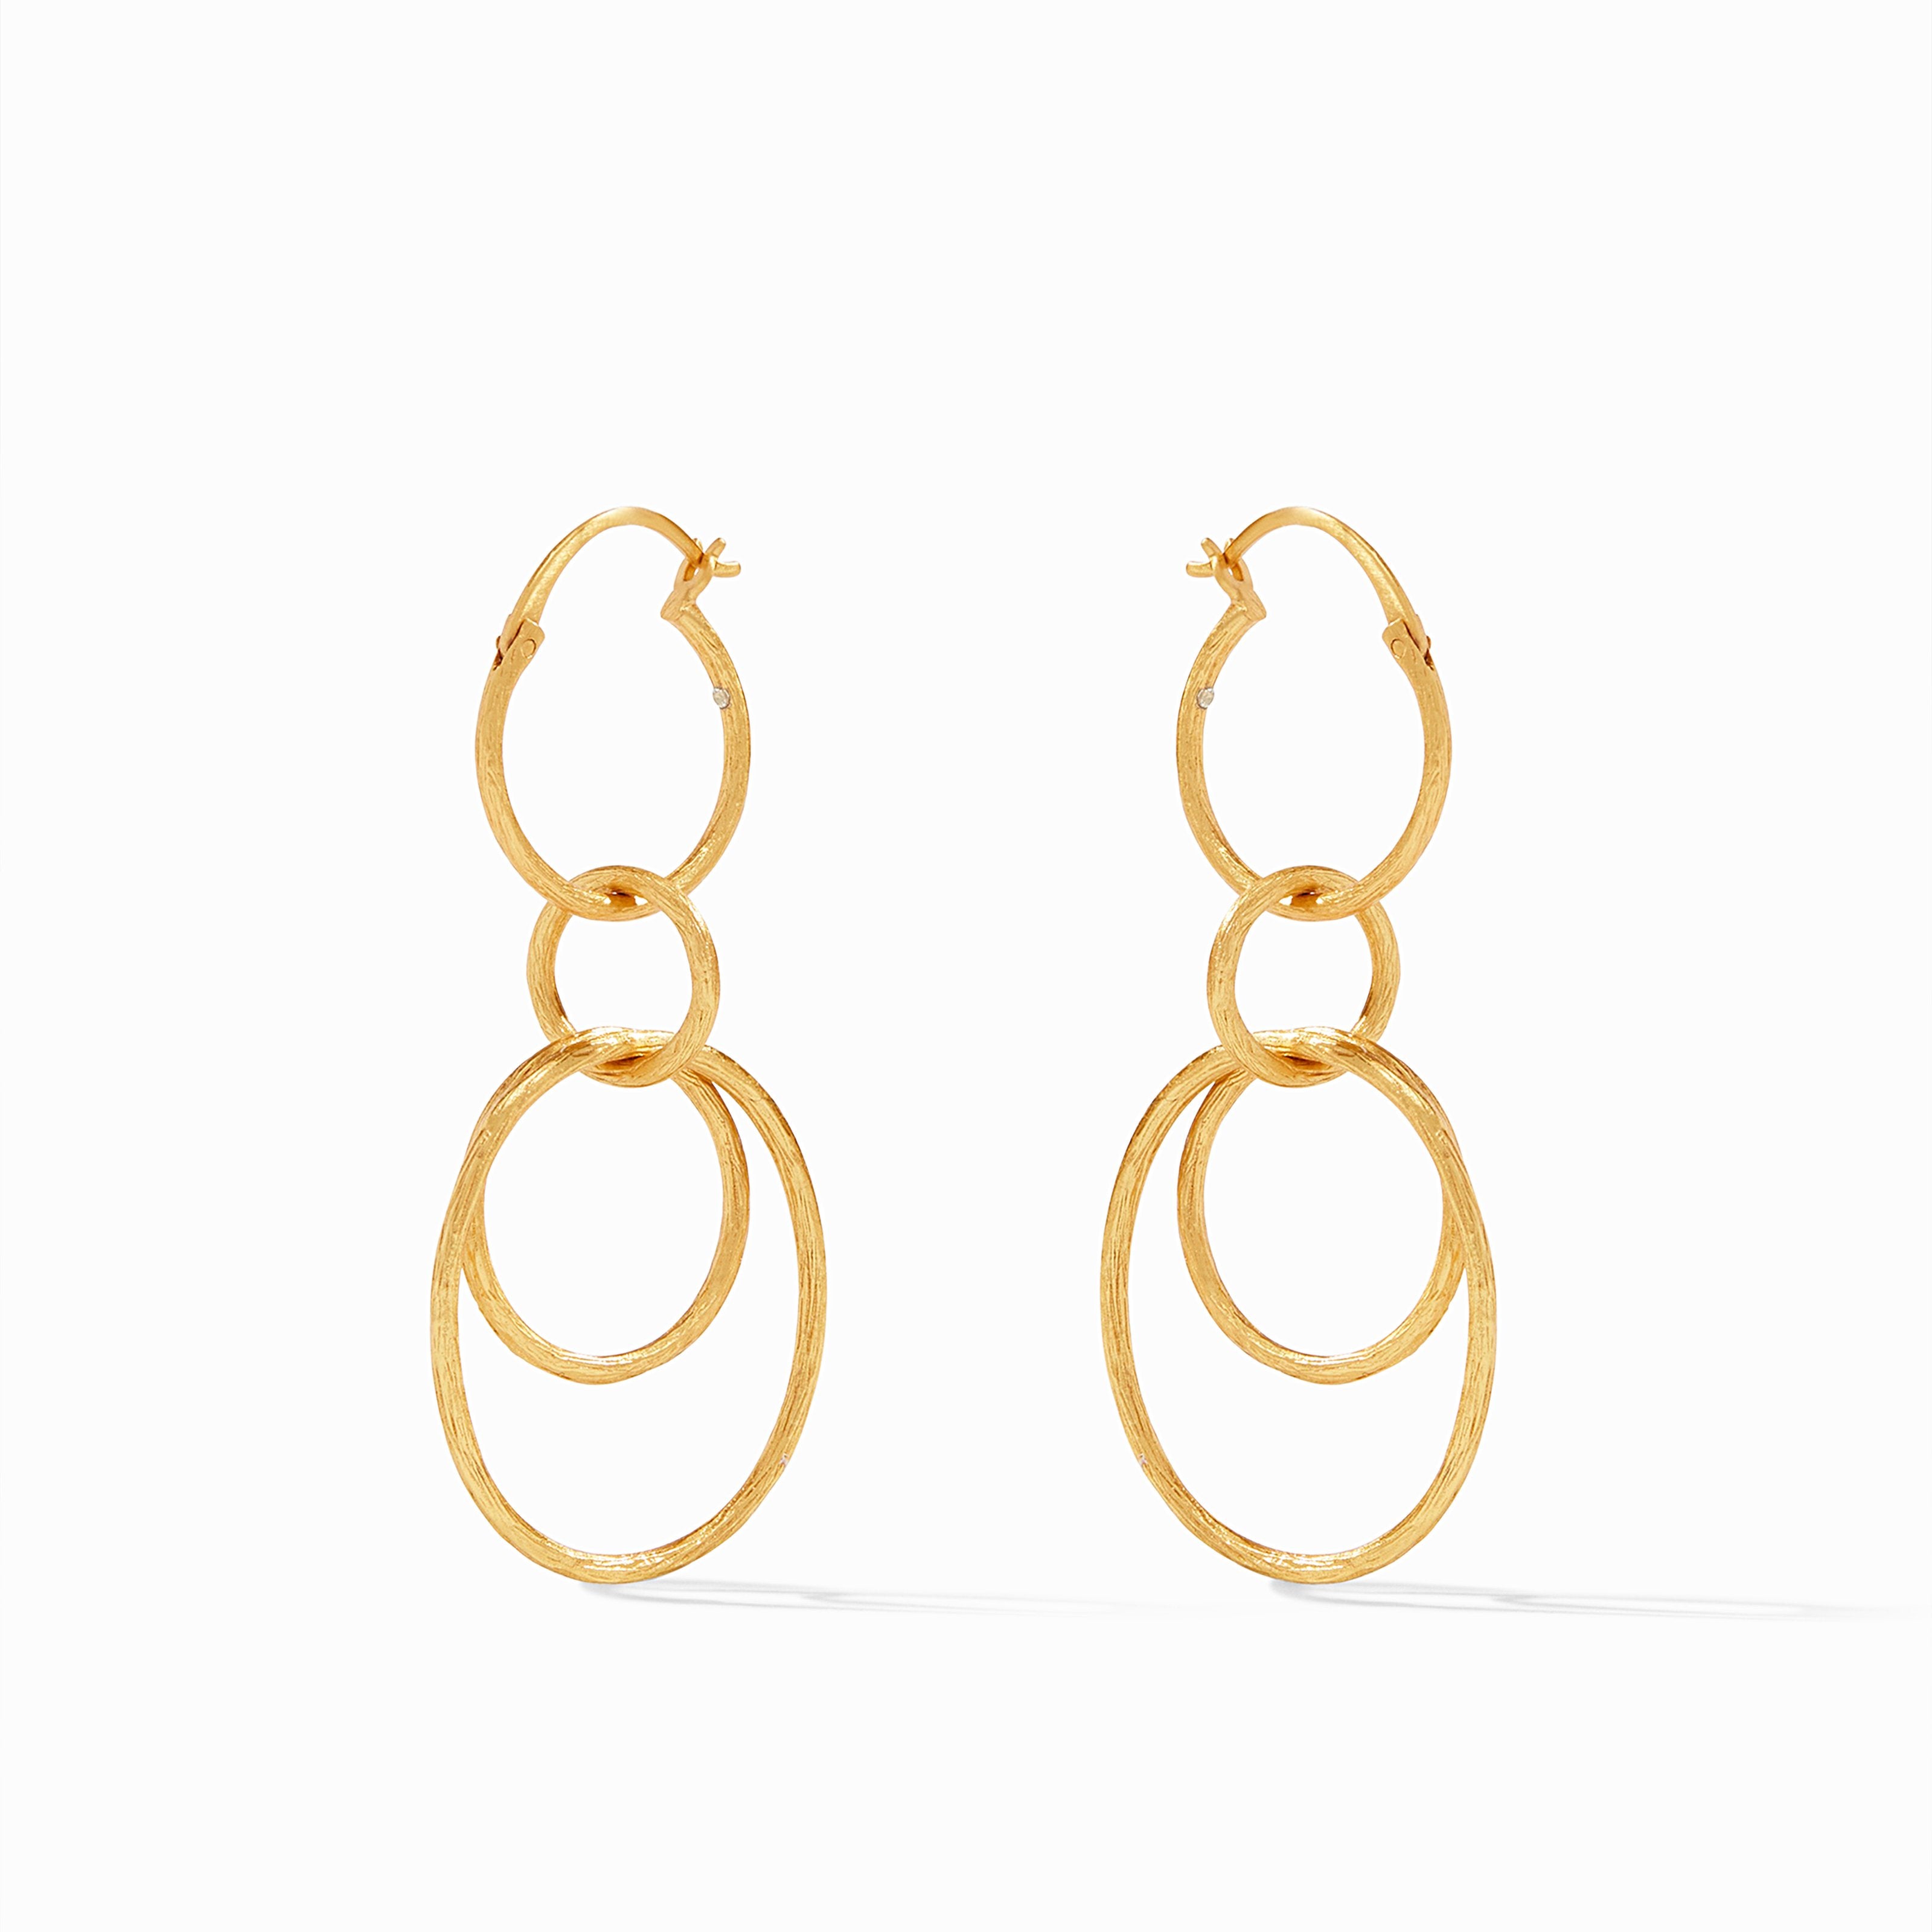 Vos Simone 3-in-1 Earrings | Julie Gold